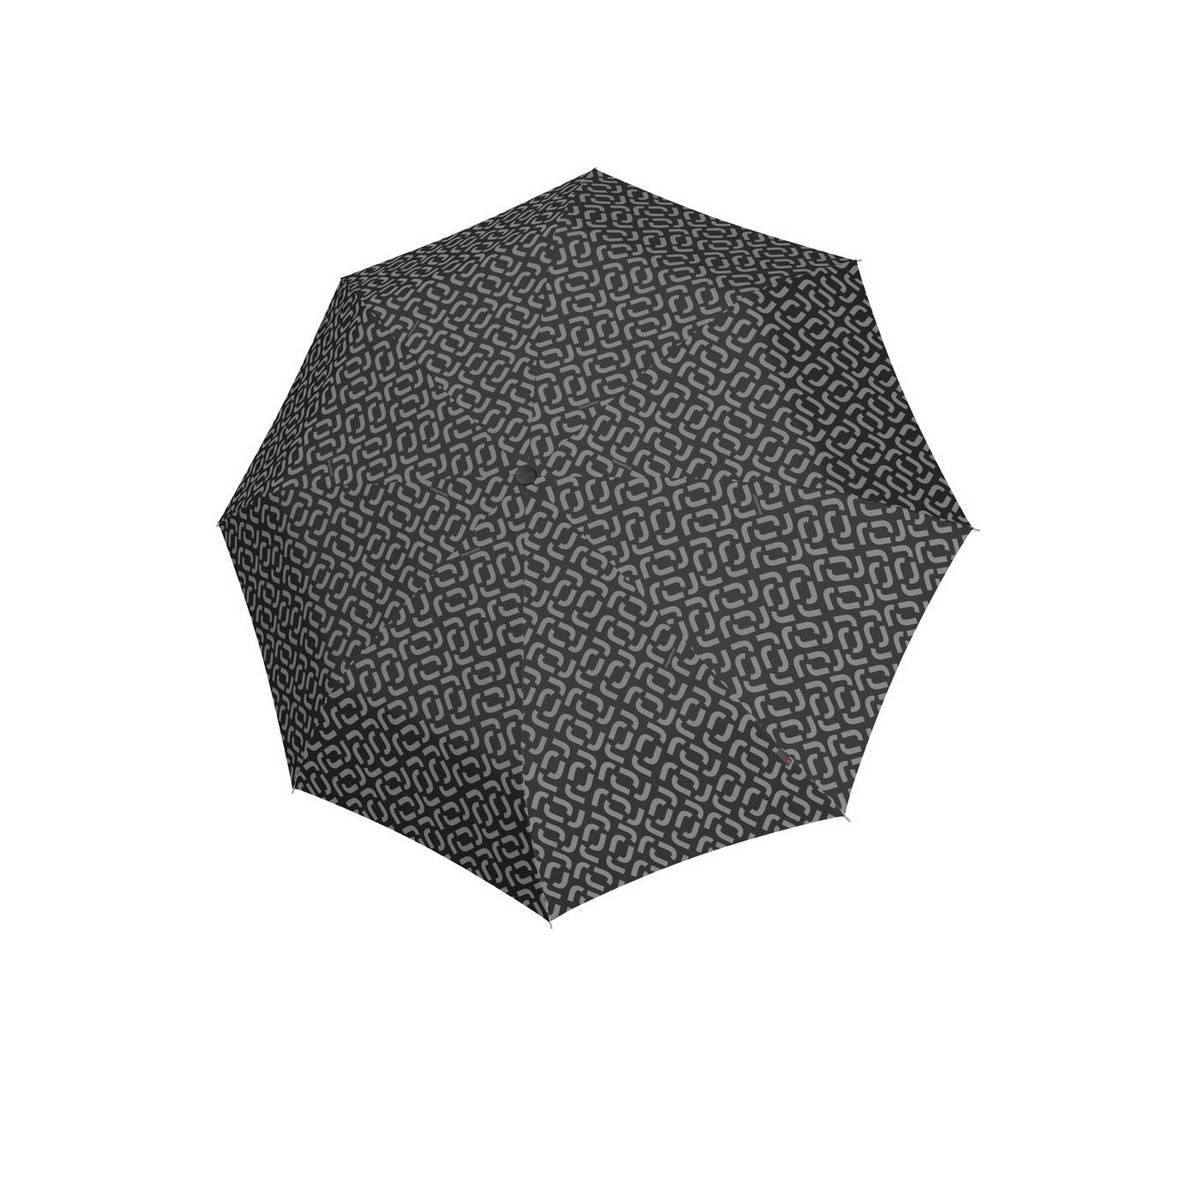 Deštník Reisenthel Umbrella Pocket Duomatic Signature black